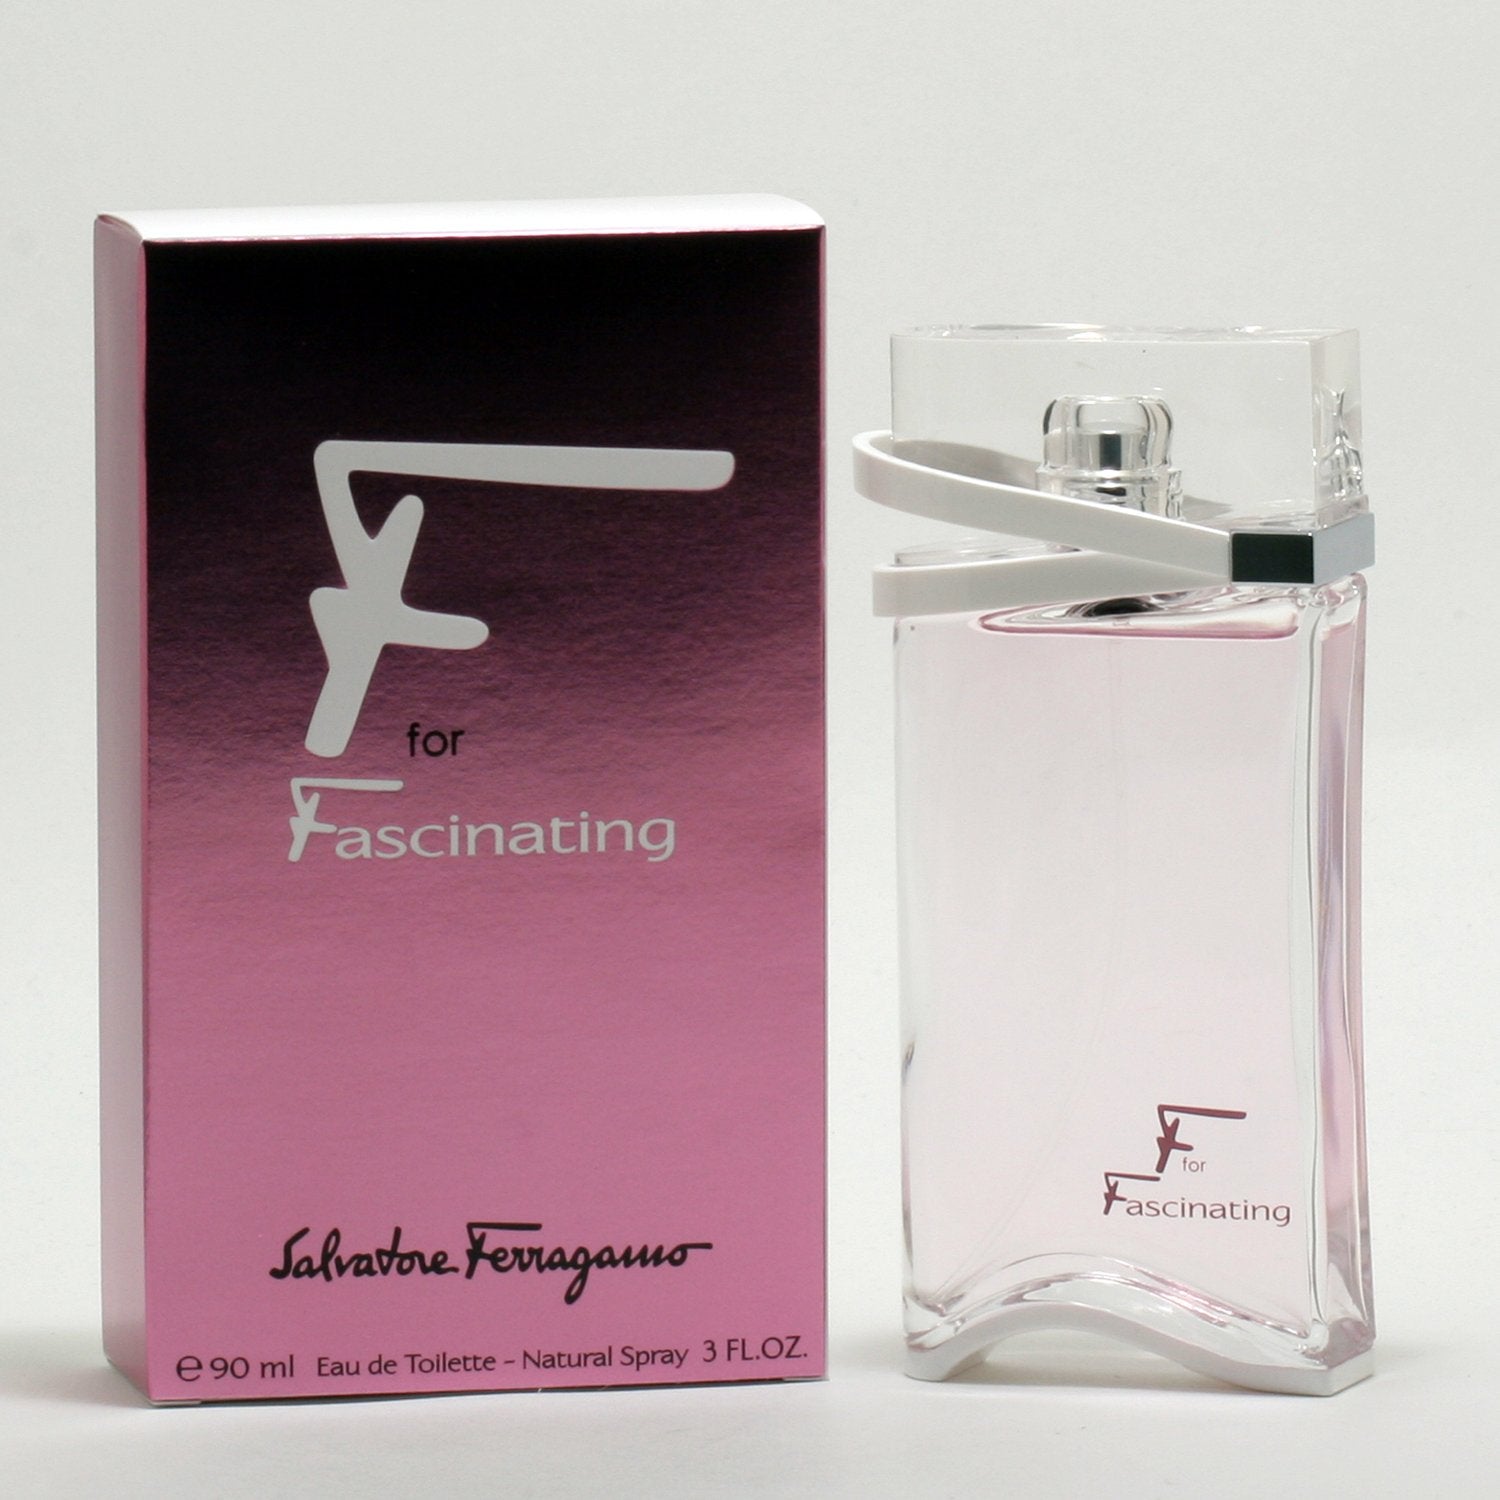 Perfume - F FOR FASCINATING FOR WOMEN BY SALVATORE FERRAGAMO - EAU DE TOILETTE SPRAY, 3.0 OZ